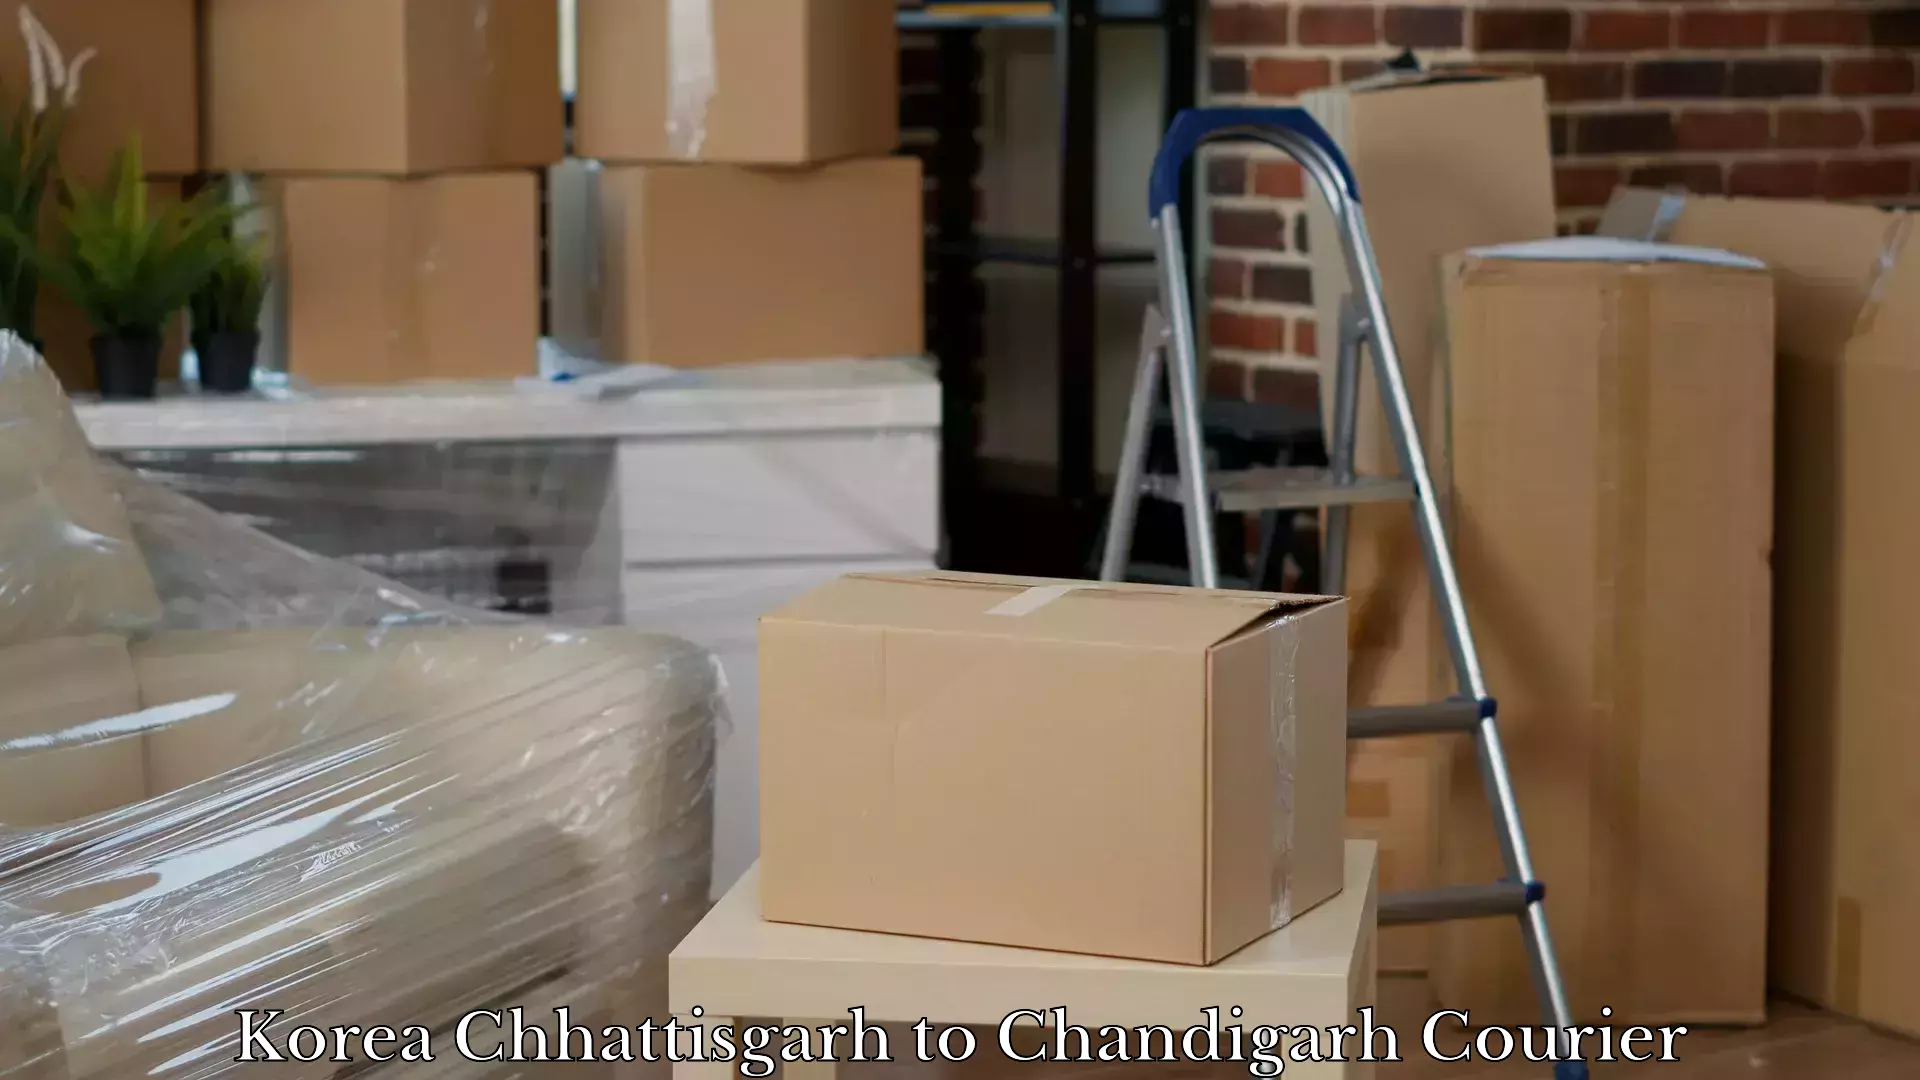 Luggage shipment specialists Korea Chhattisgarh to Chandigarh